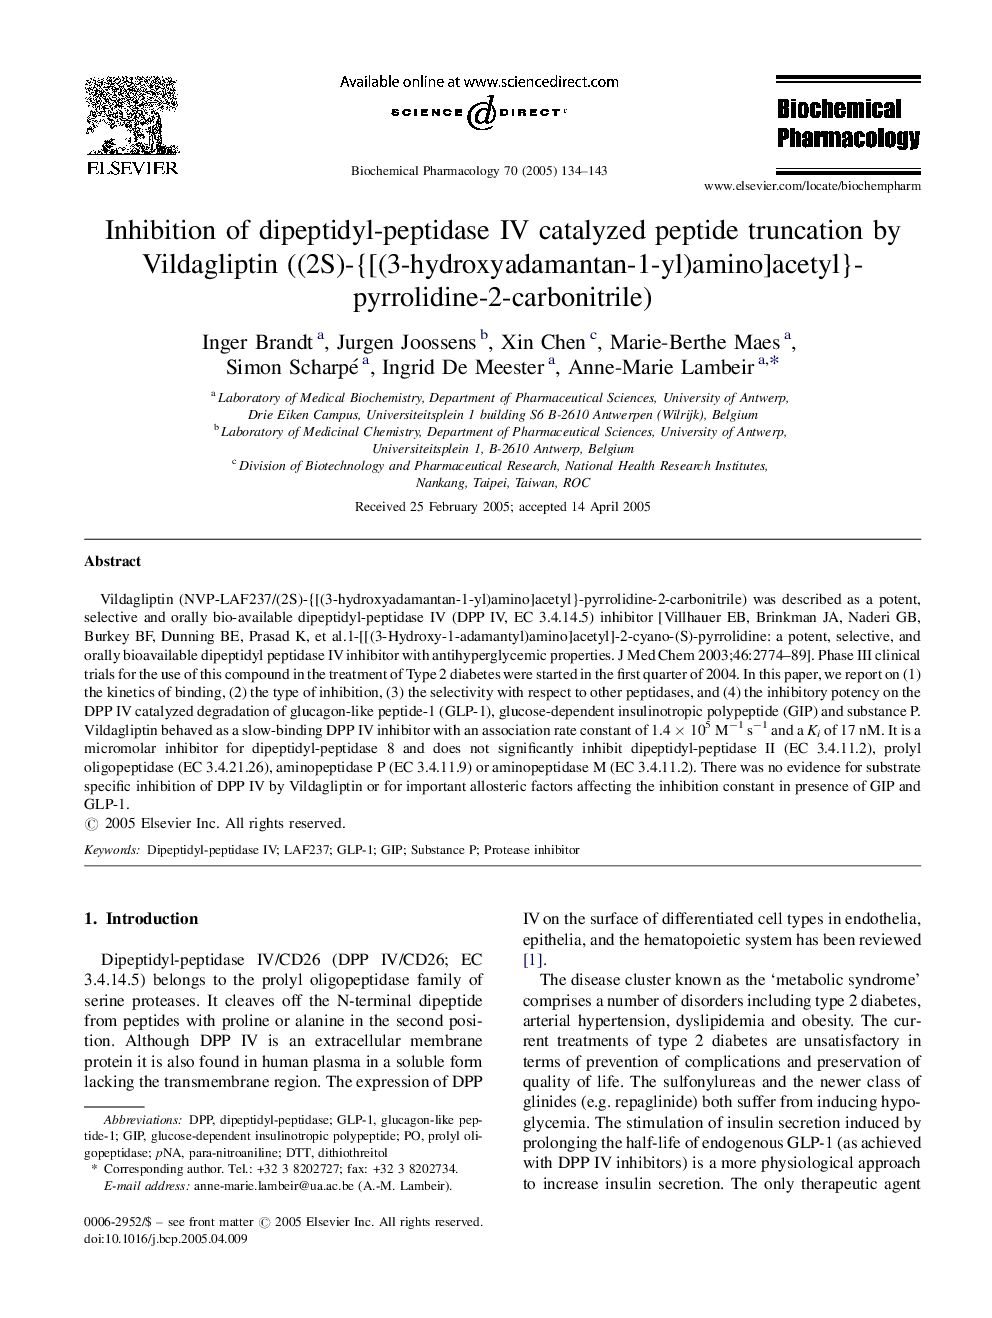 Inhibition of dipeptidyl-peptidase IV catalyzed peptide truncation by Vildagliptin ((2S)-{[(3-hydroxyadamantan-1-yl)amino]acetyl}-pyrrolidine-2-carbonitrile)